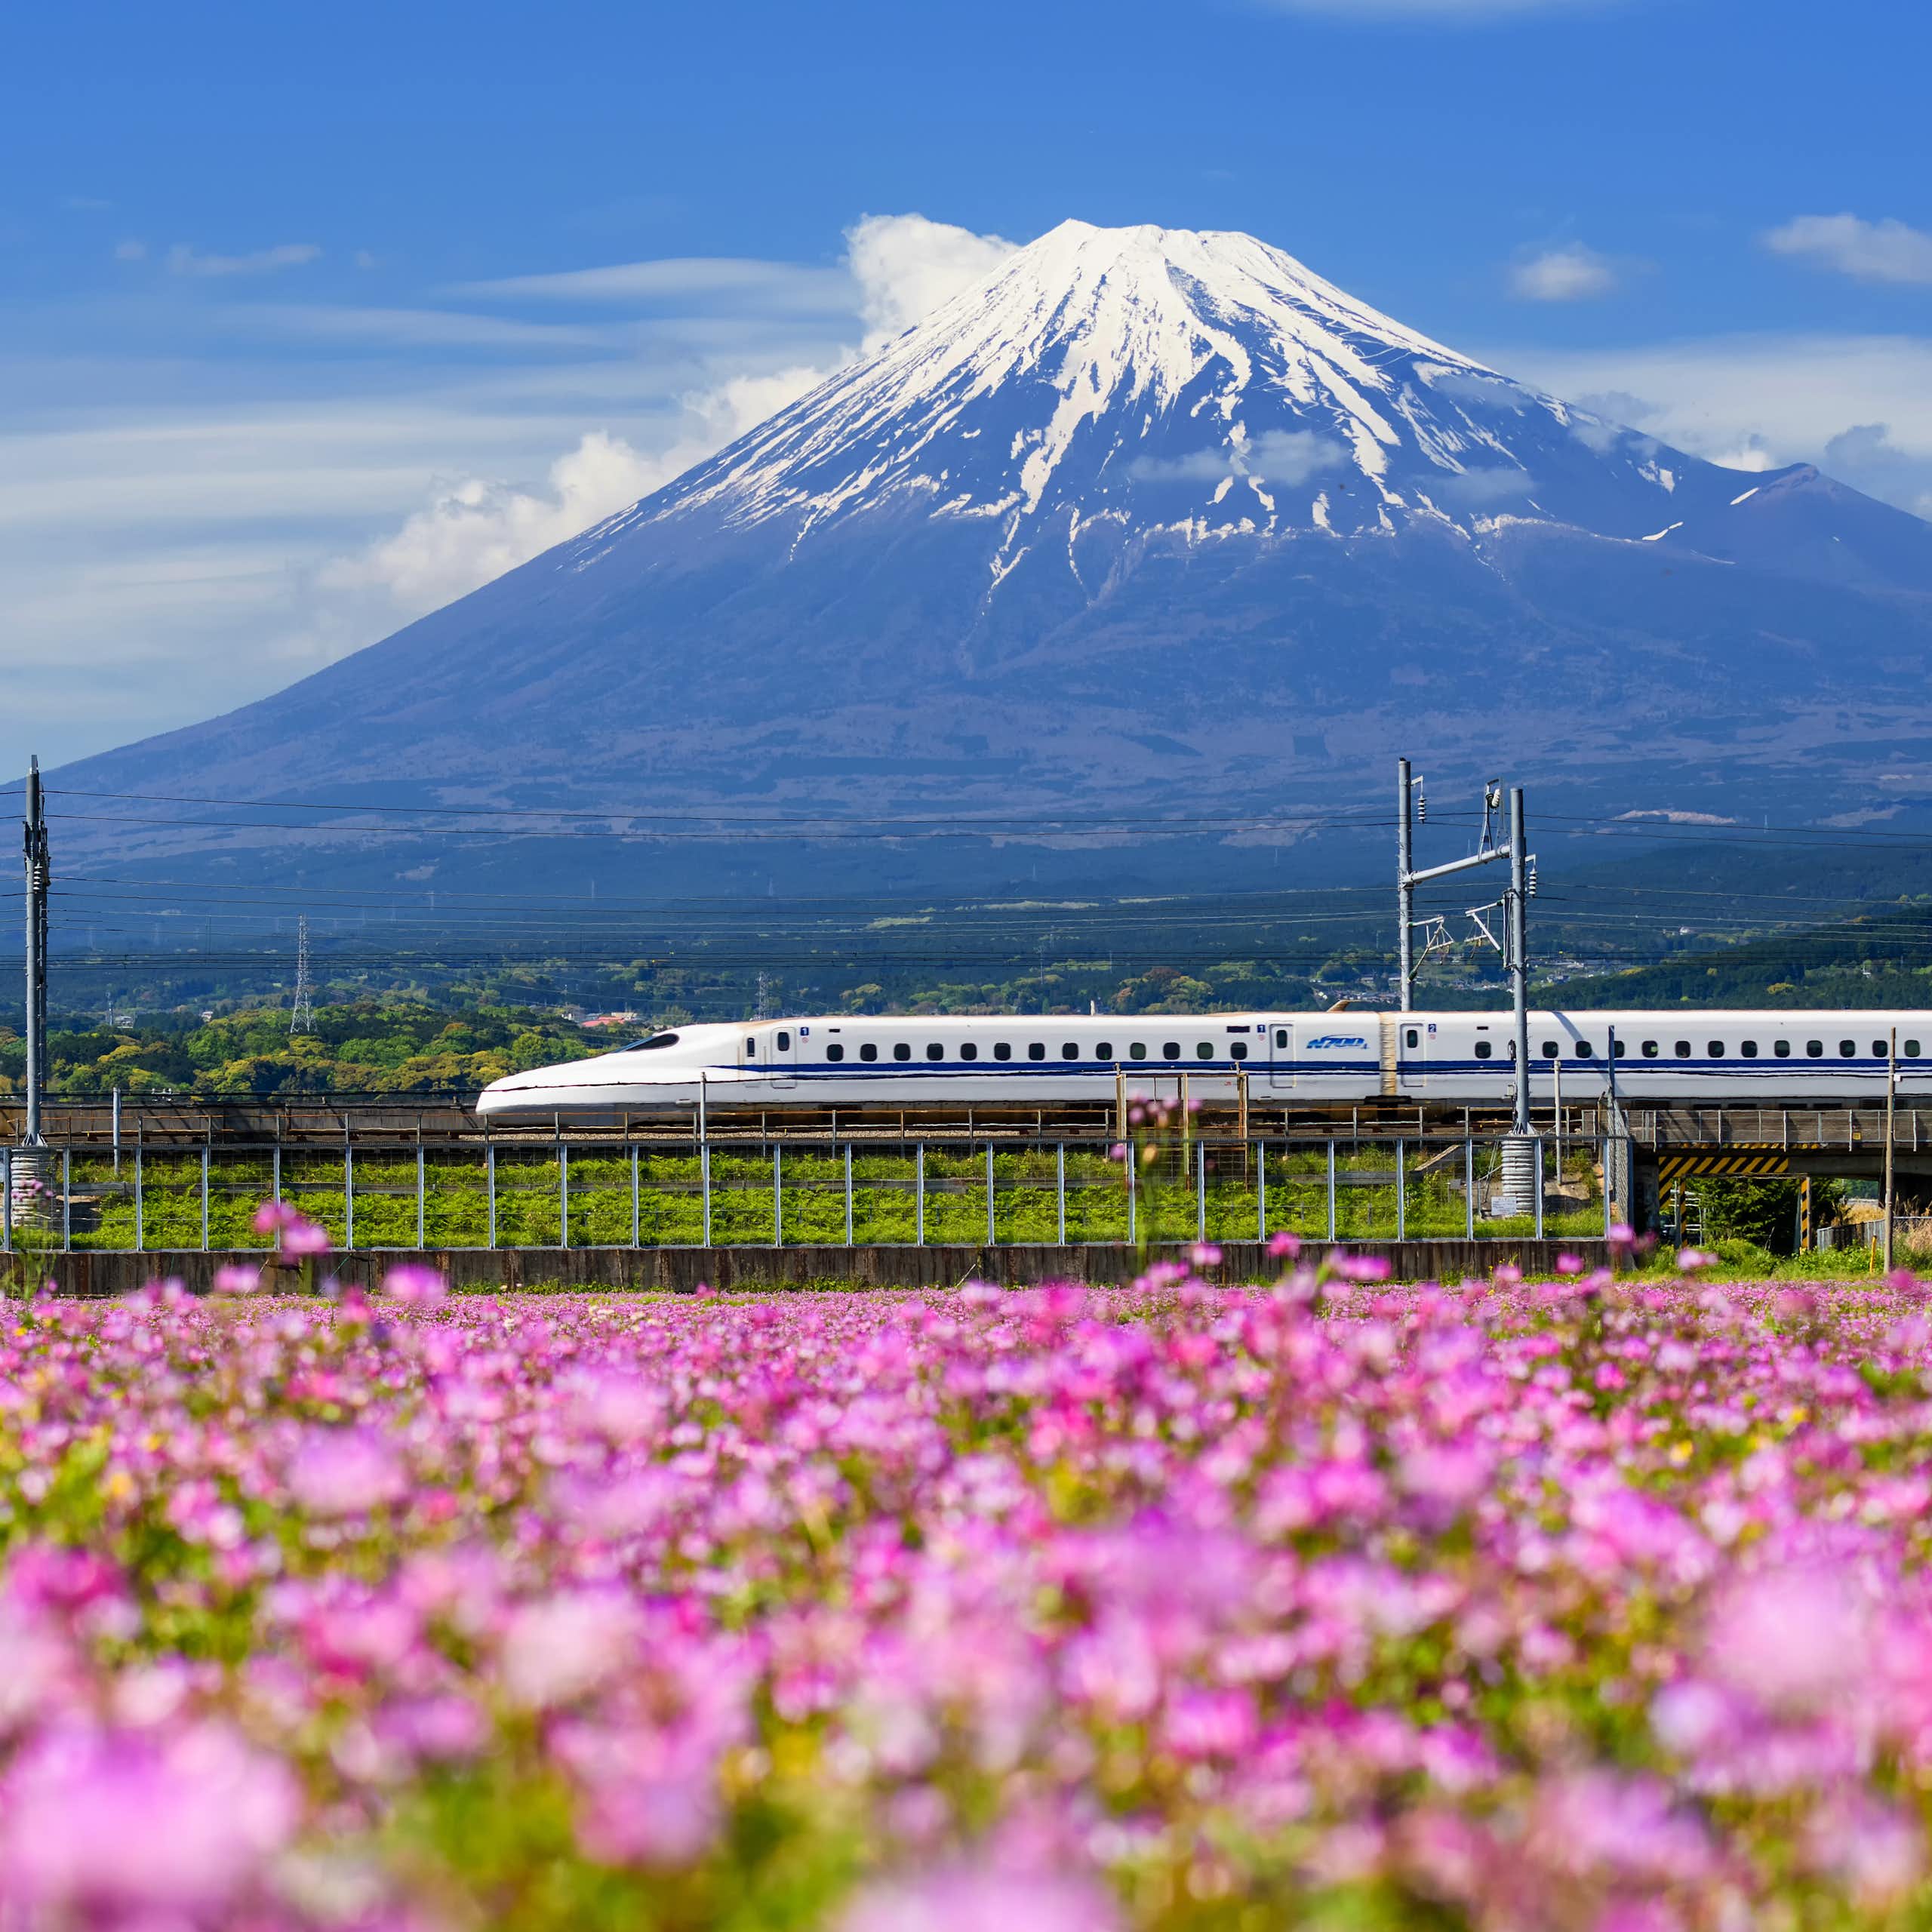 A Shinkansen bullet train running past Mount Fuji in Japan.